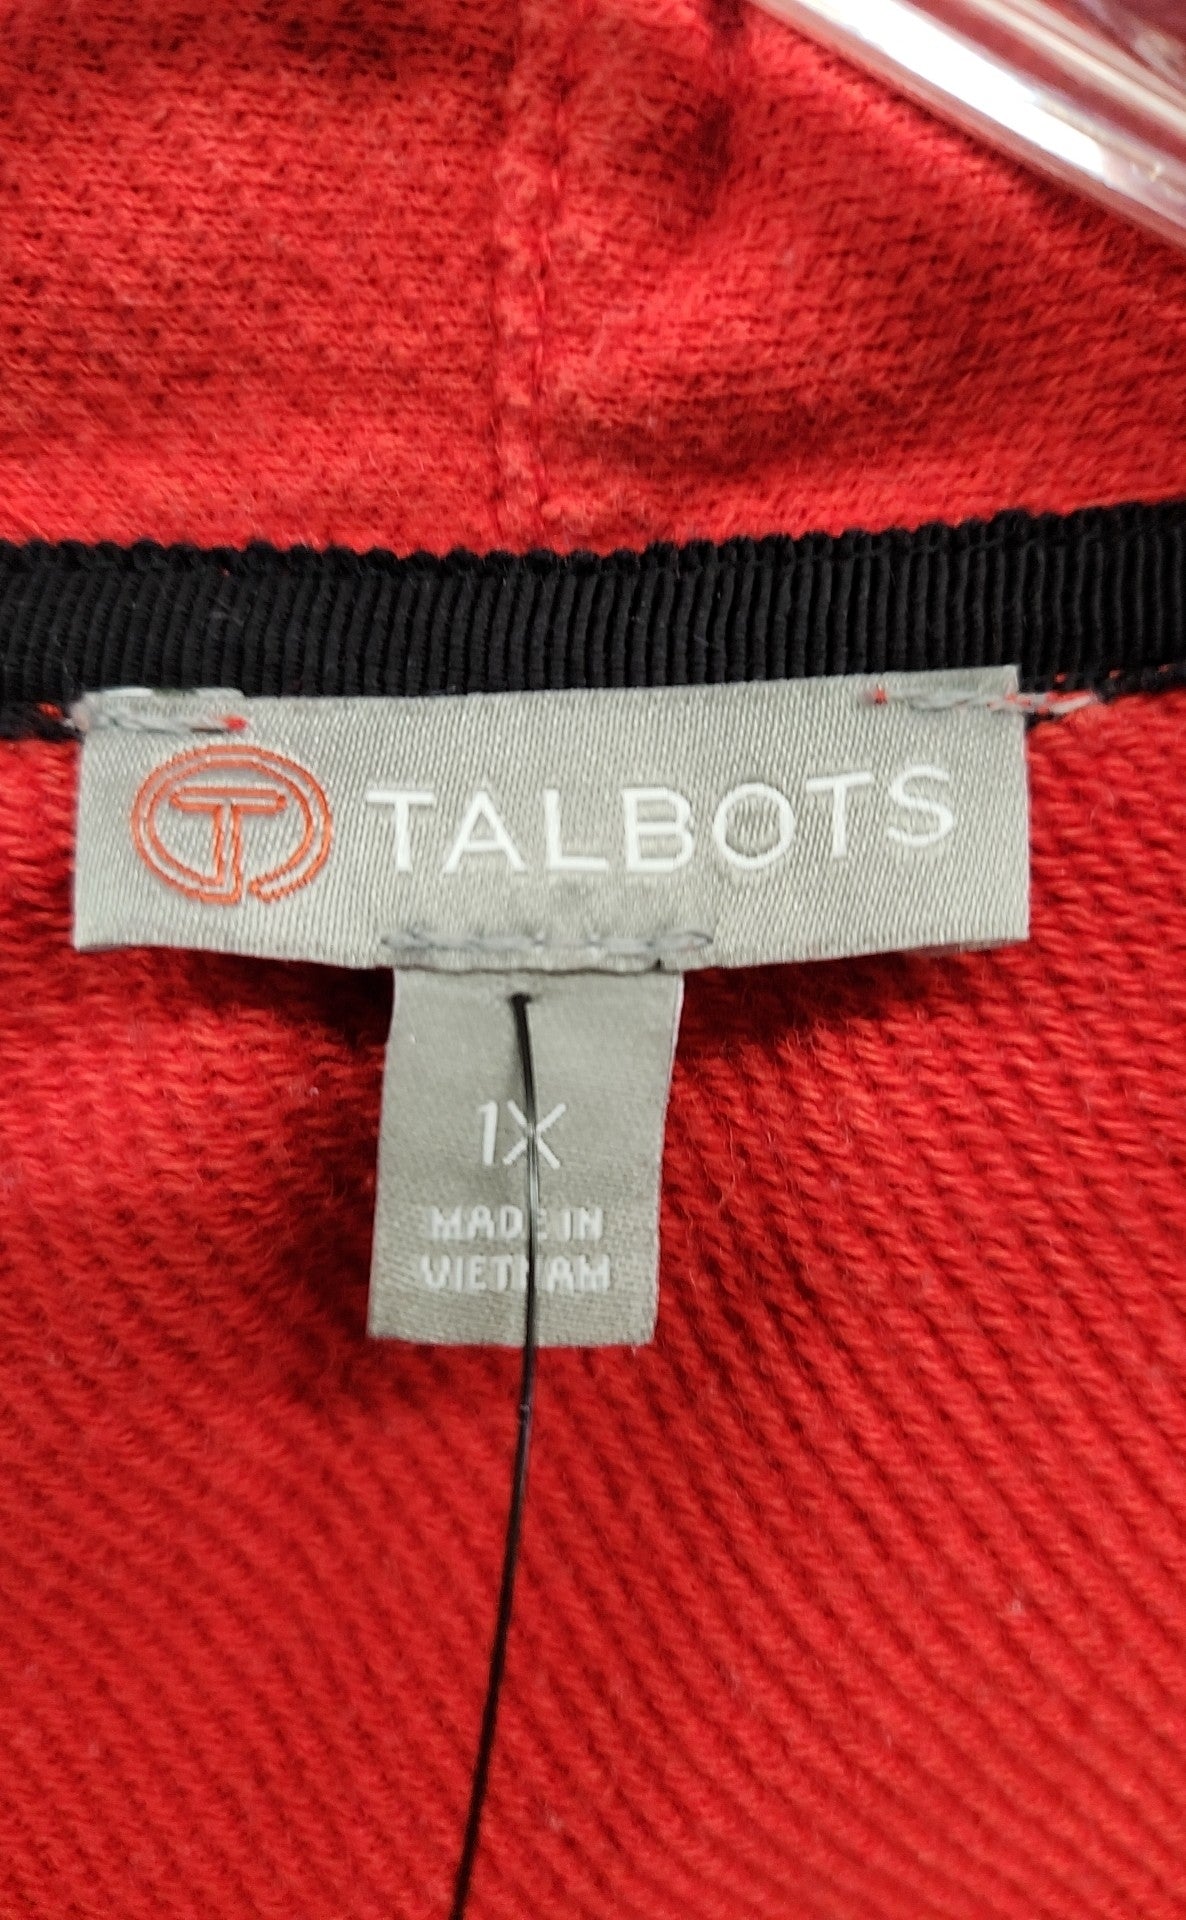 Talbots Women's Size 1X Red Cardigan